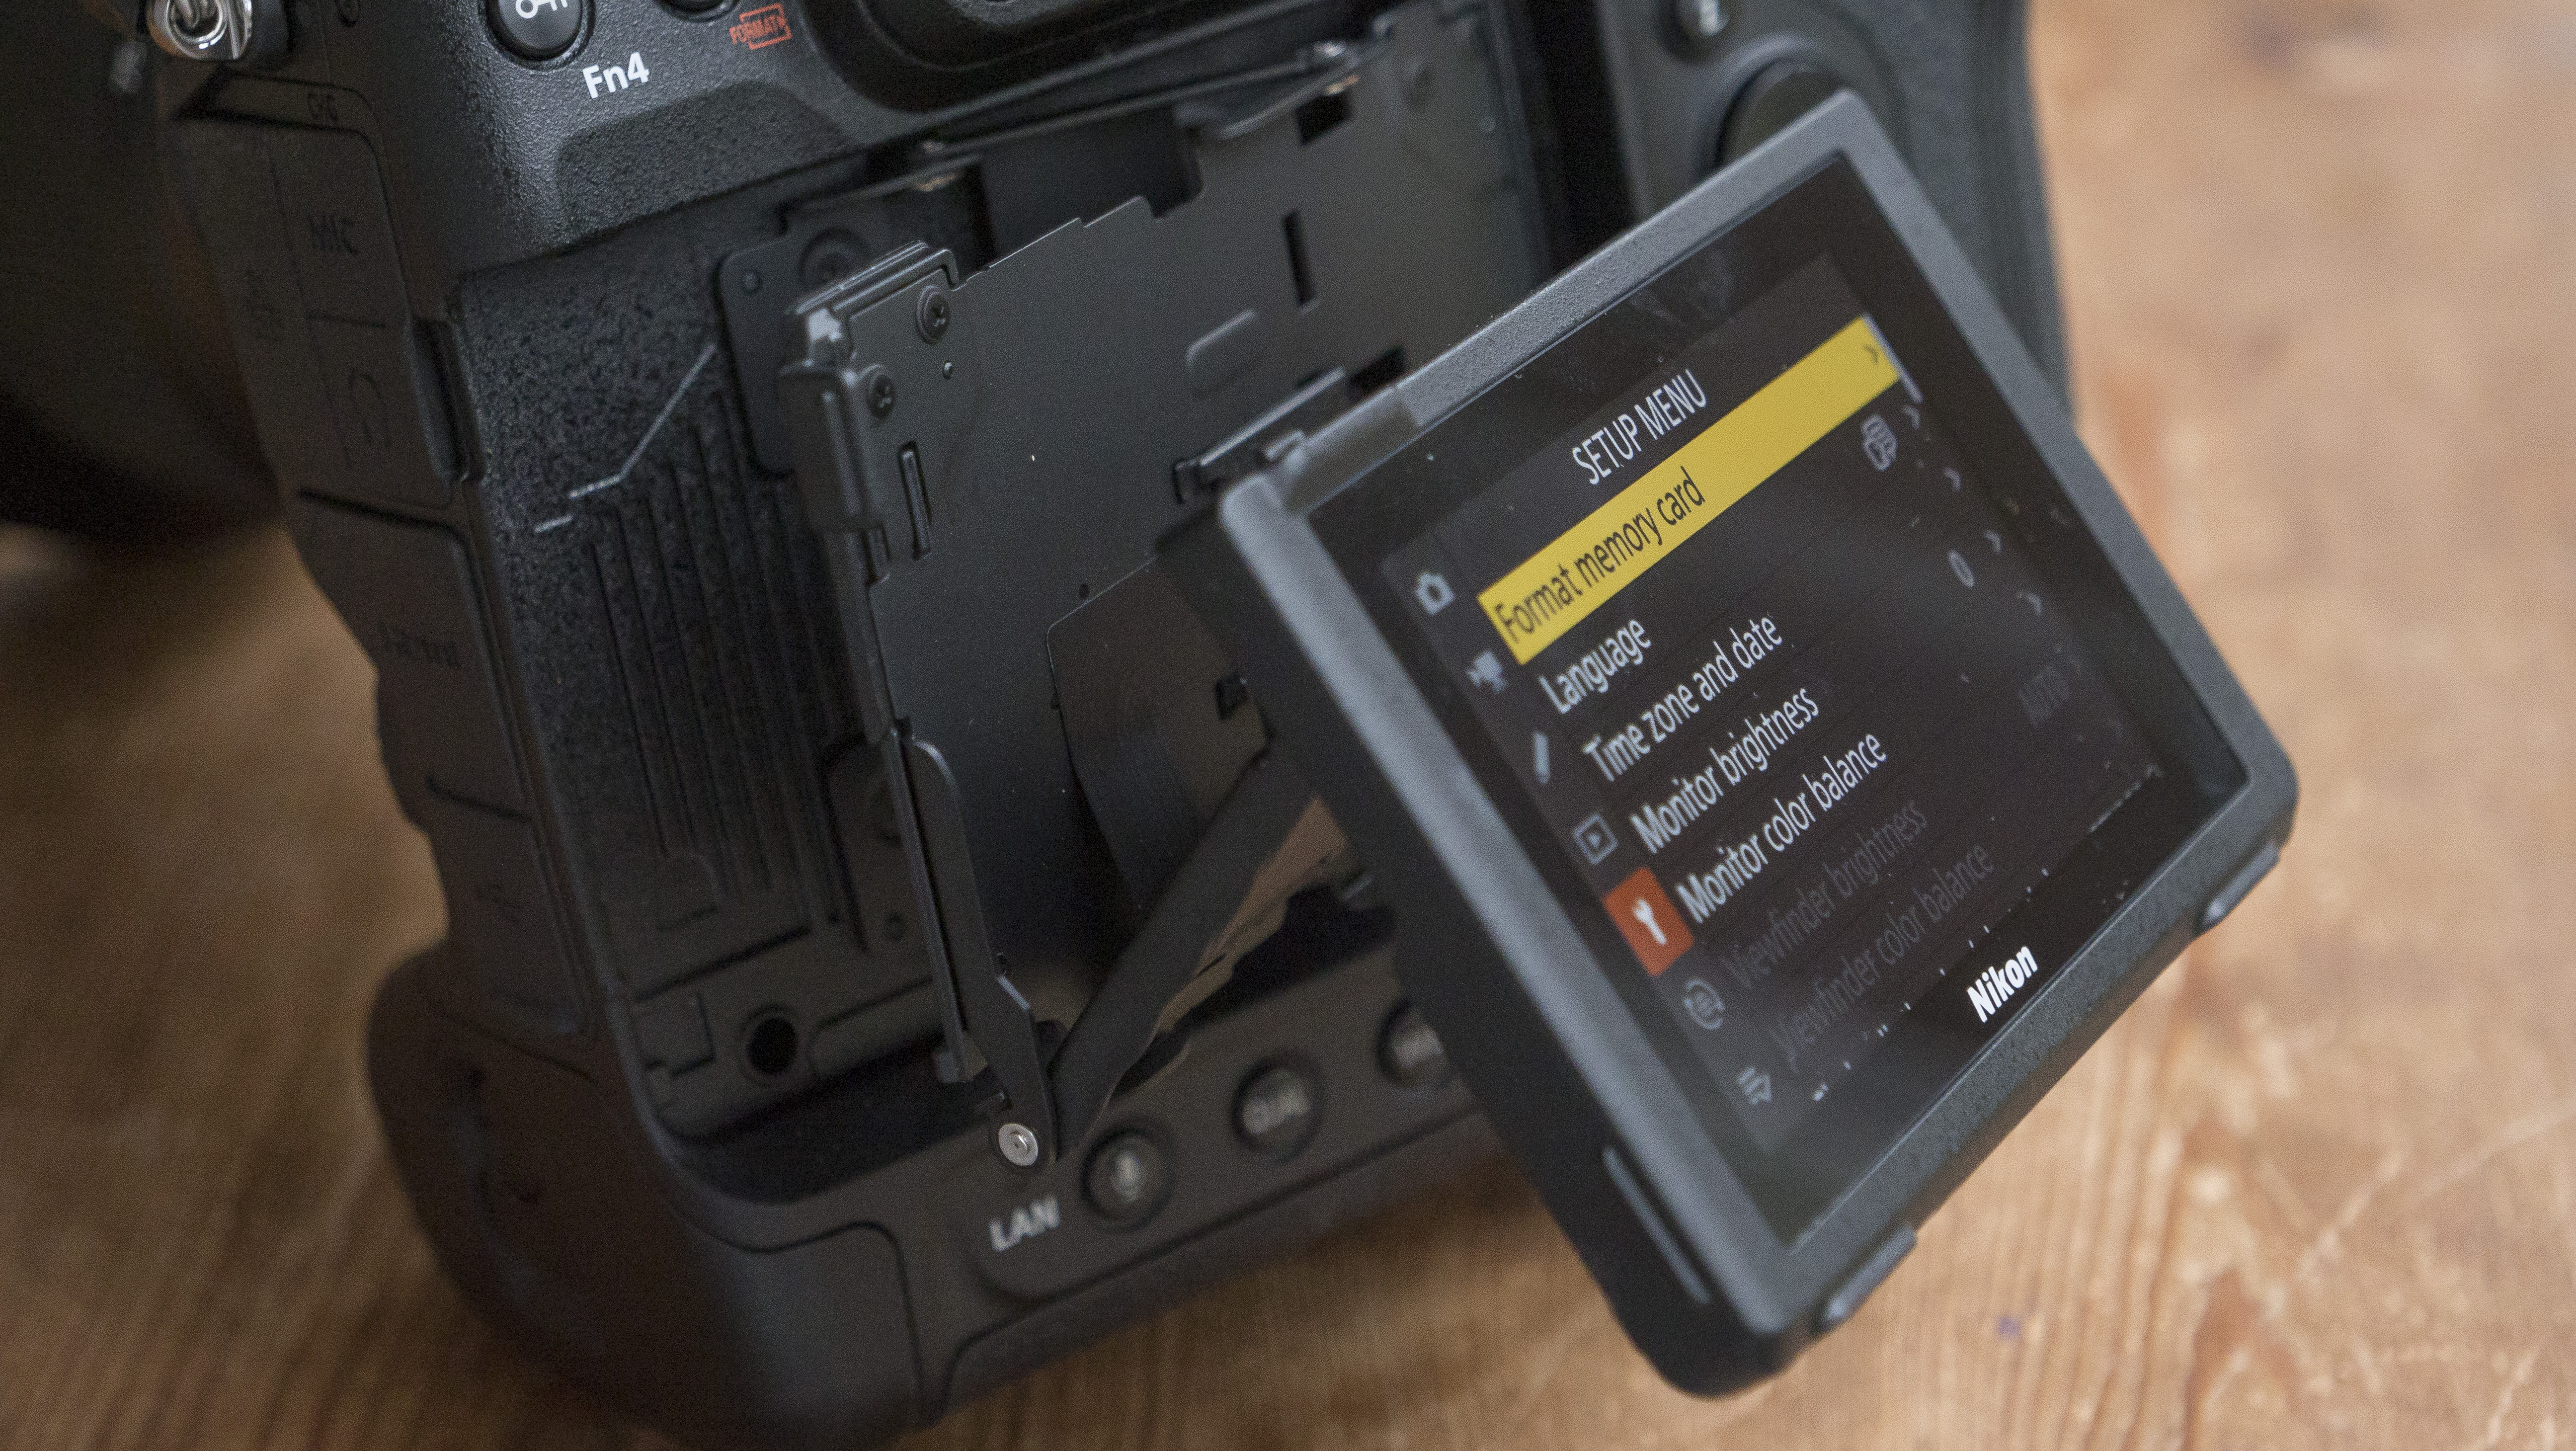 A tilting screen from the Nikon Z9 camera